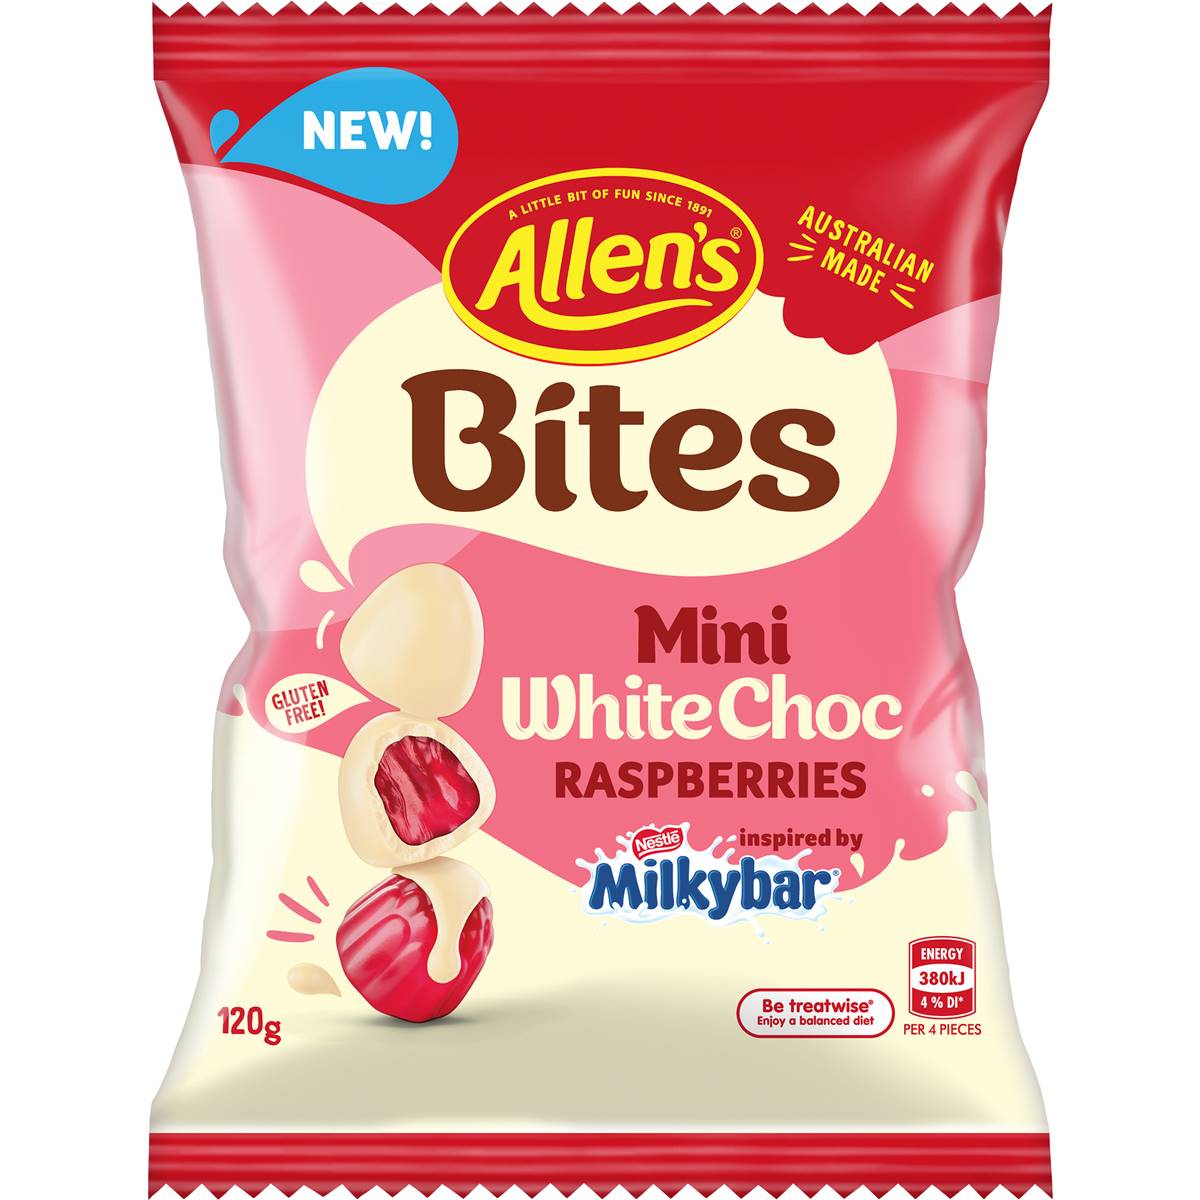 Calories in Allen's Bites Mini White Choc Raspberries